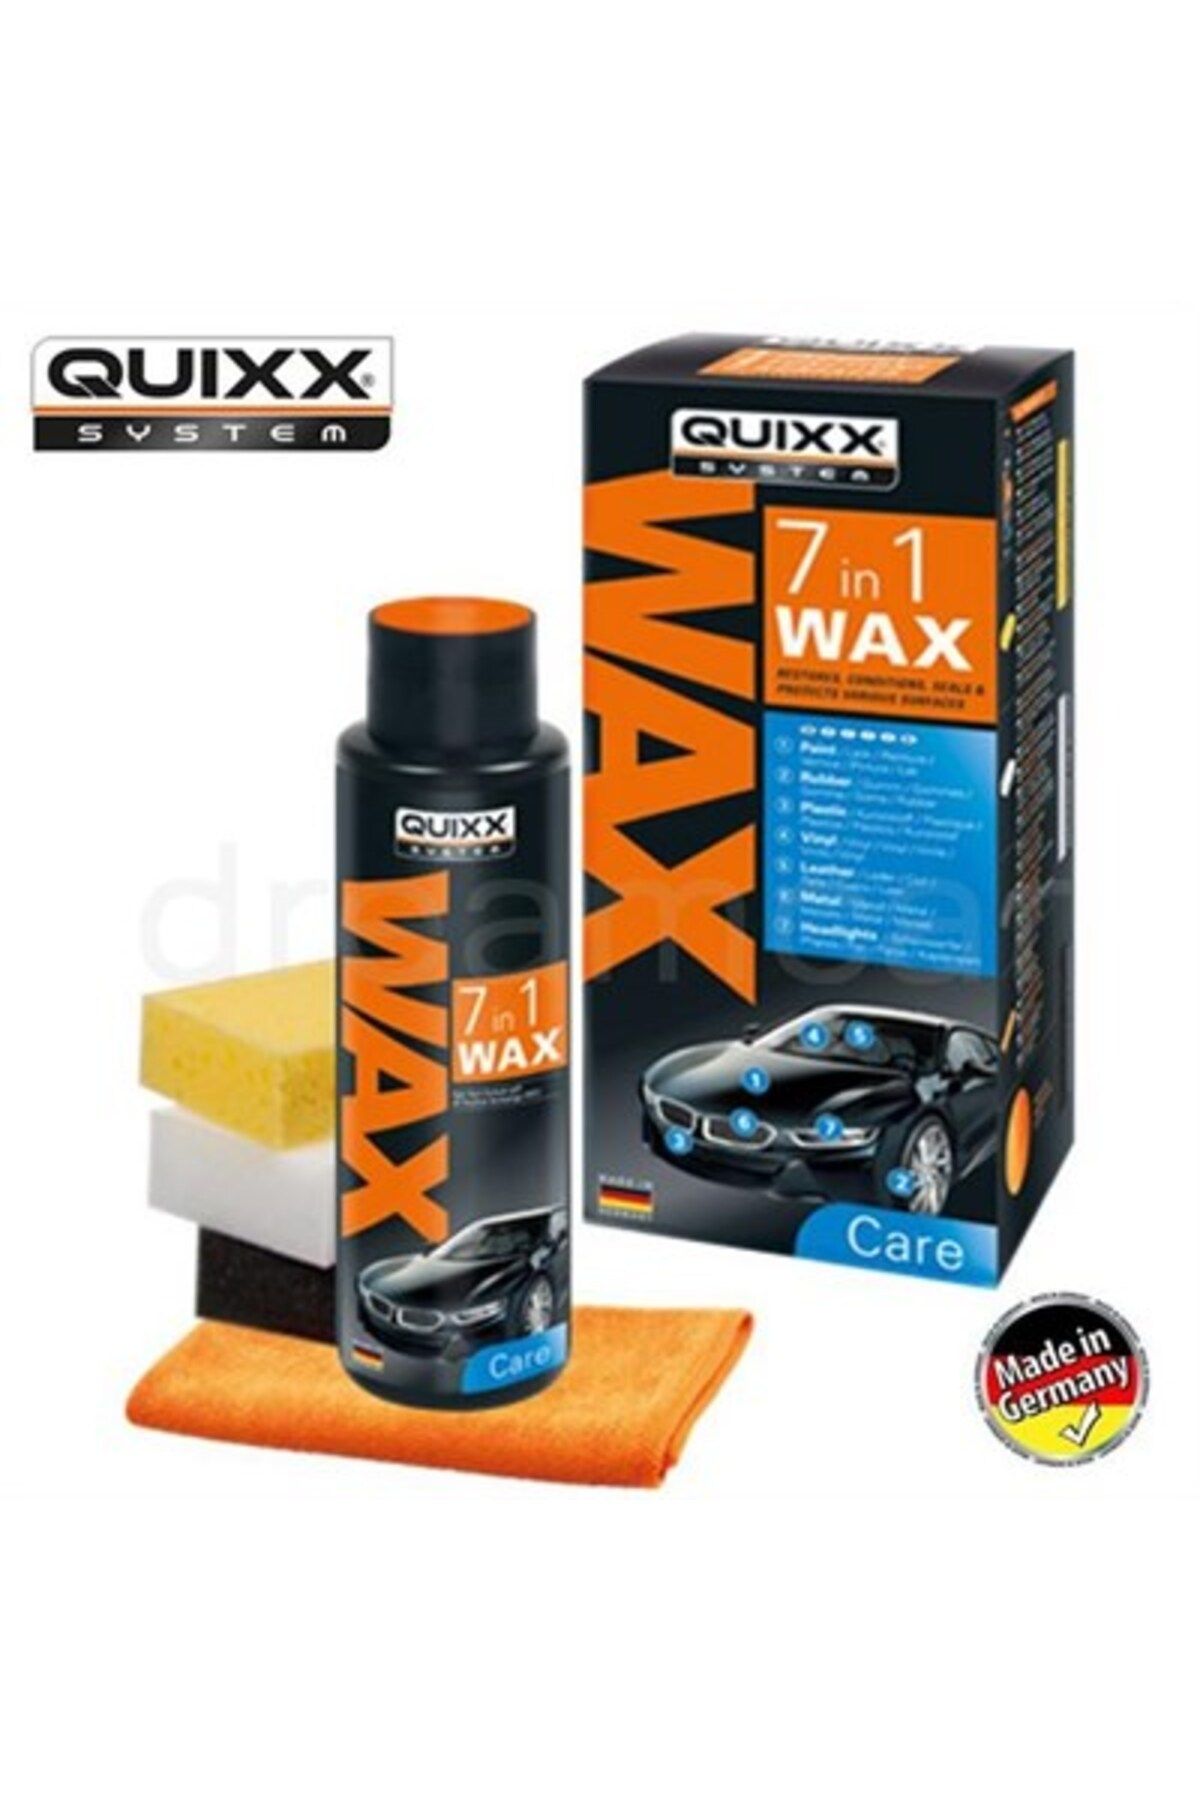 QUIXX 7in1 7 Bölge Wax Cilalama Kiti Made In Germany 38178